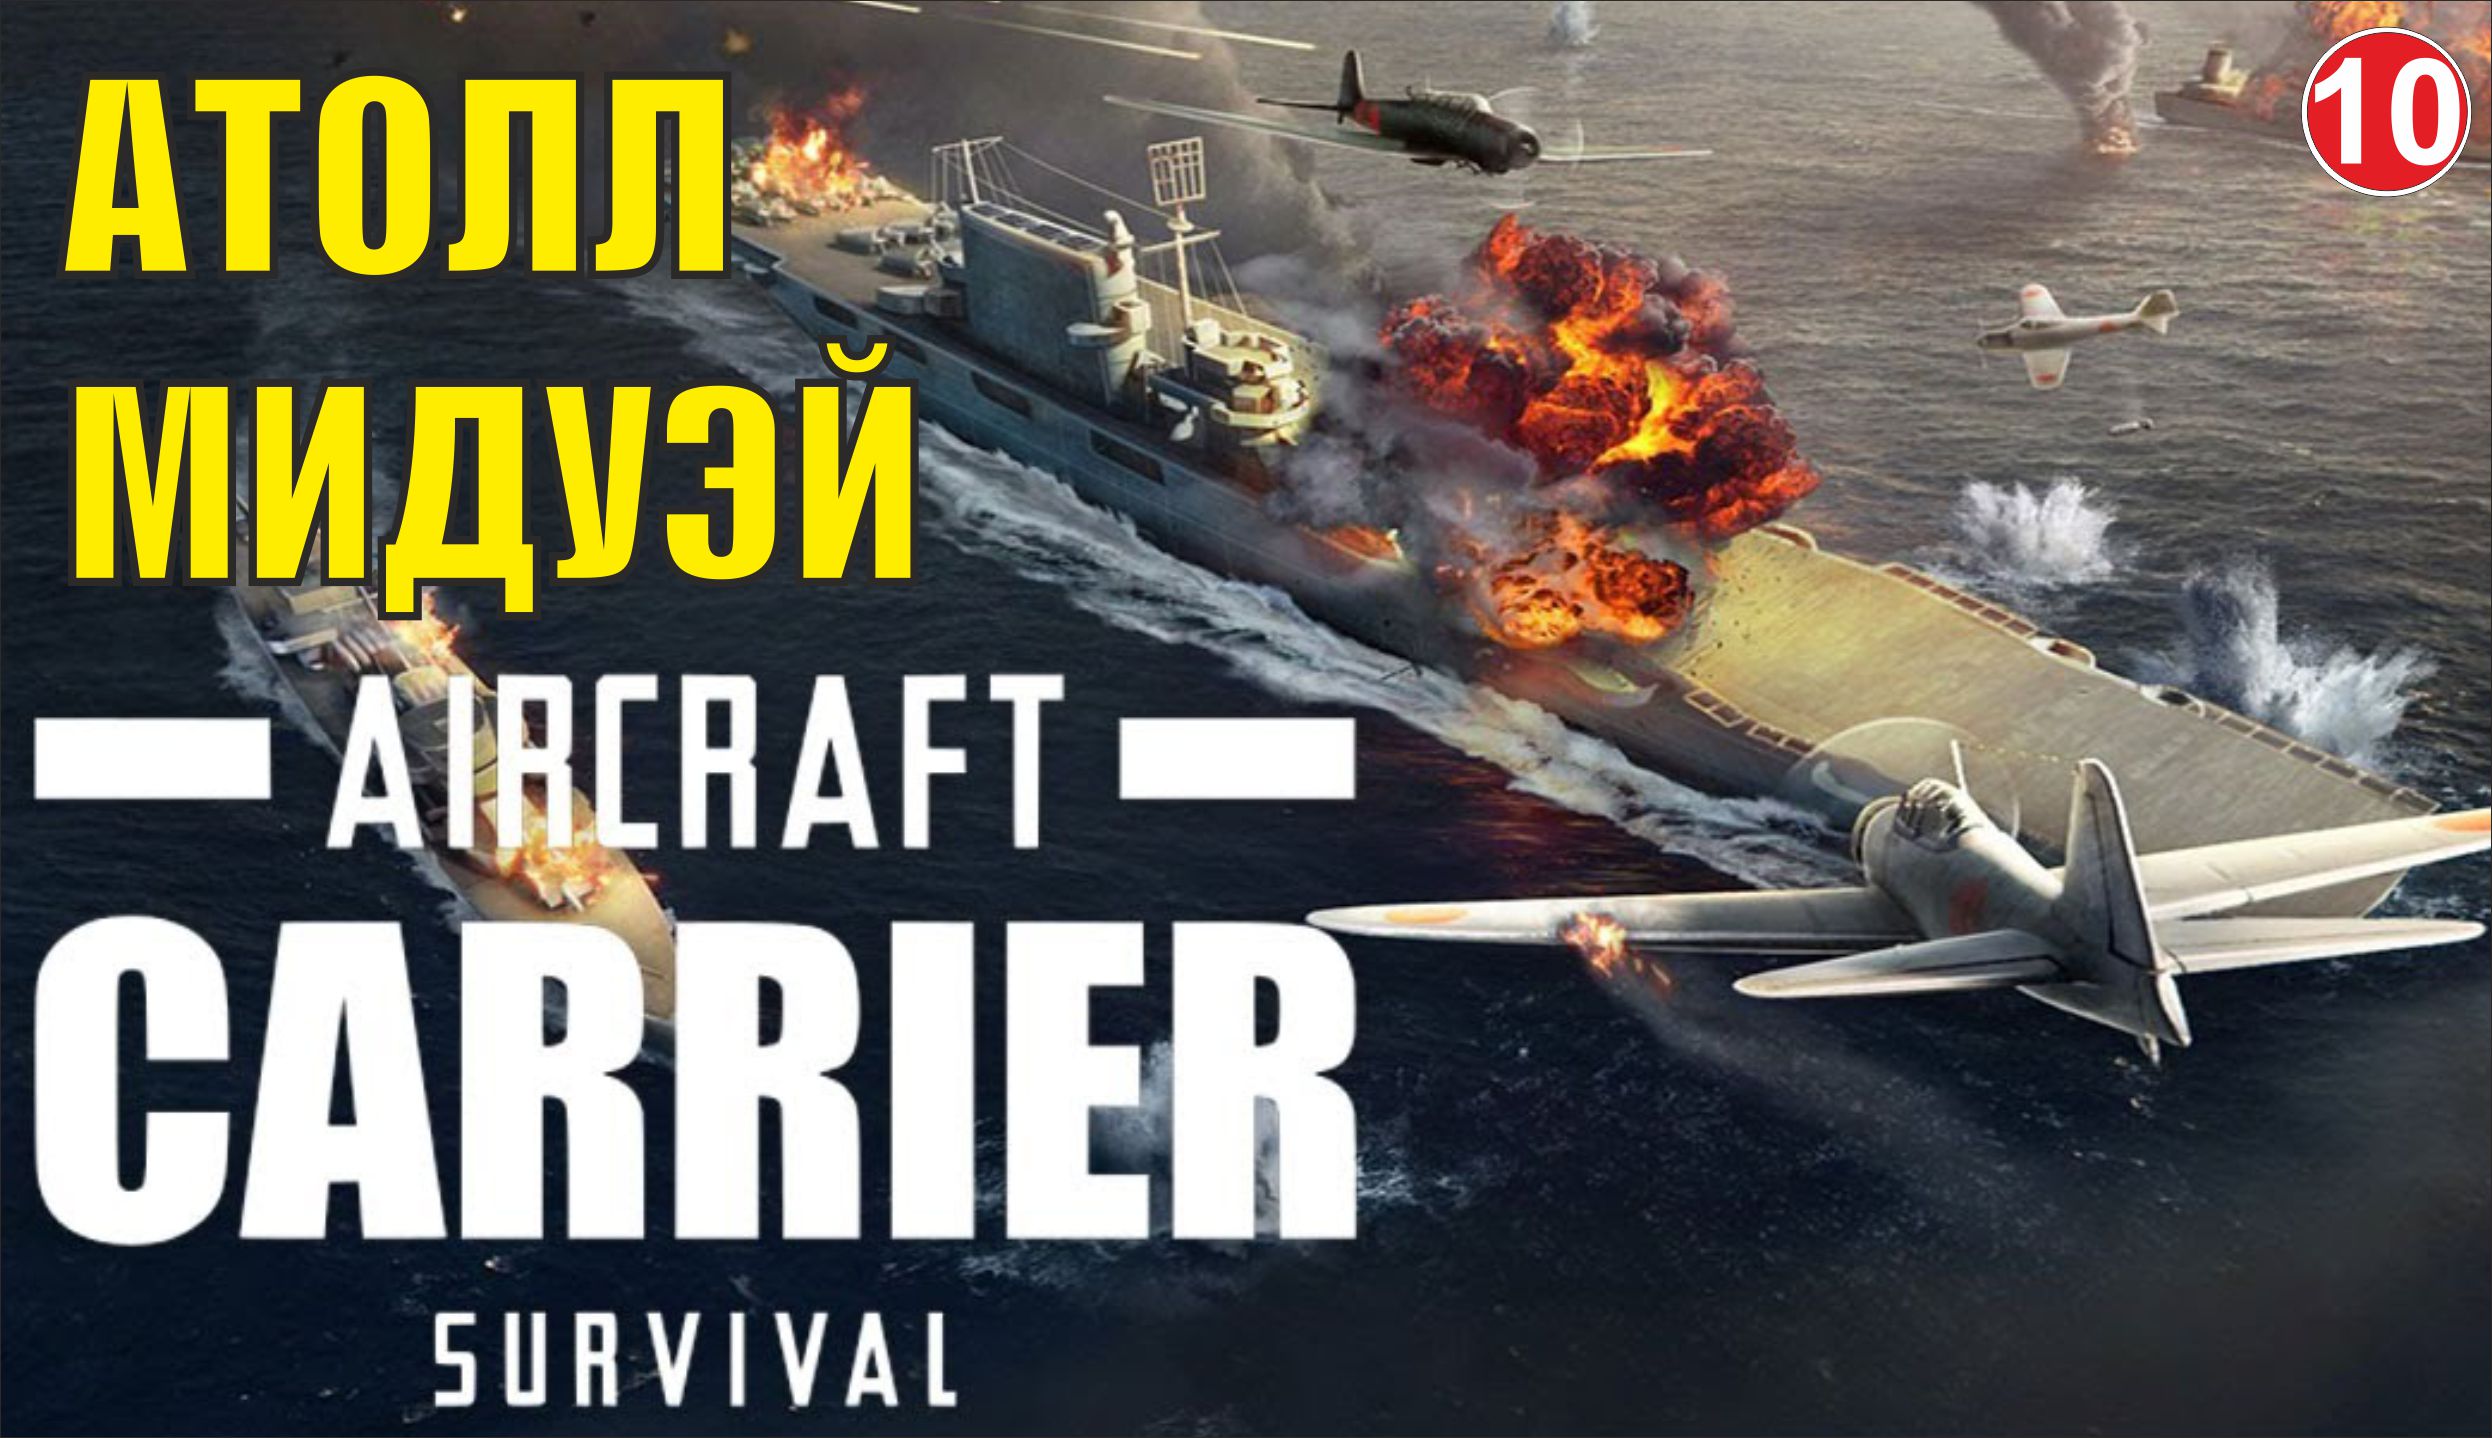 Aircraft Carrier Survival - Атолл Мидуэй